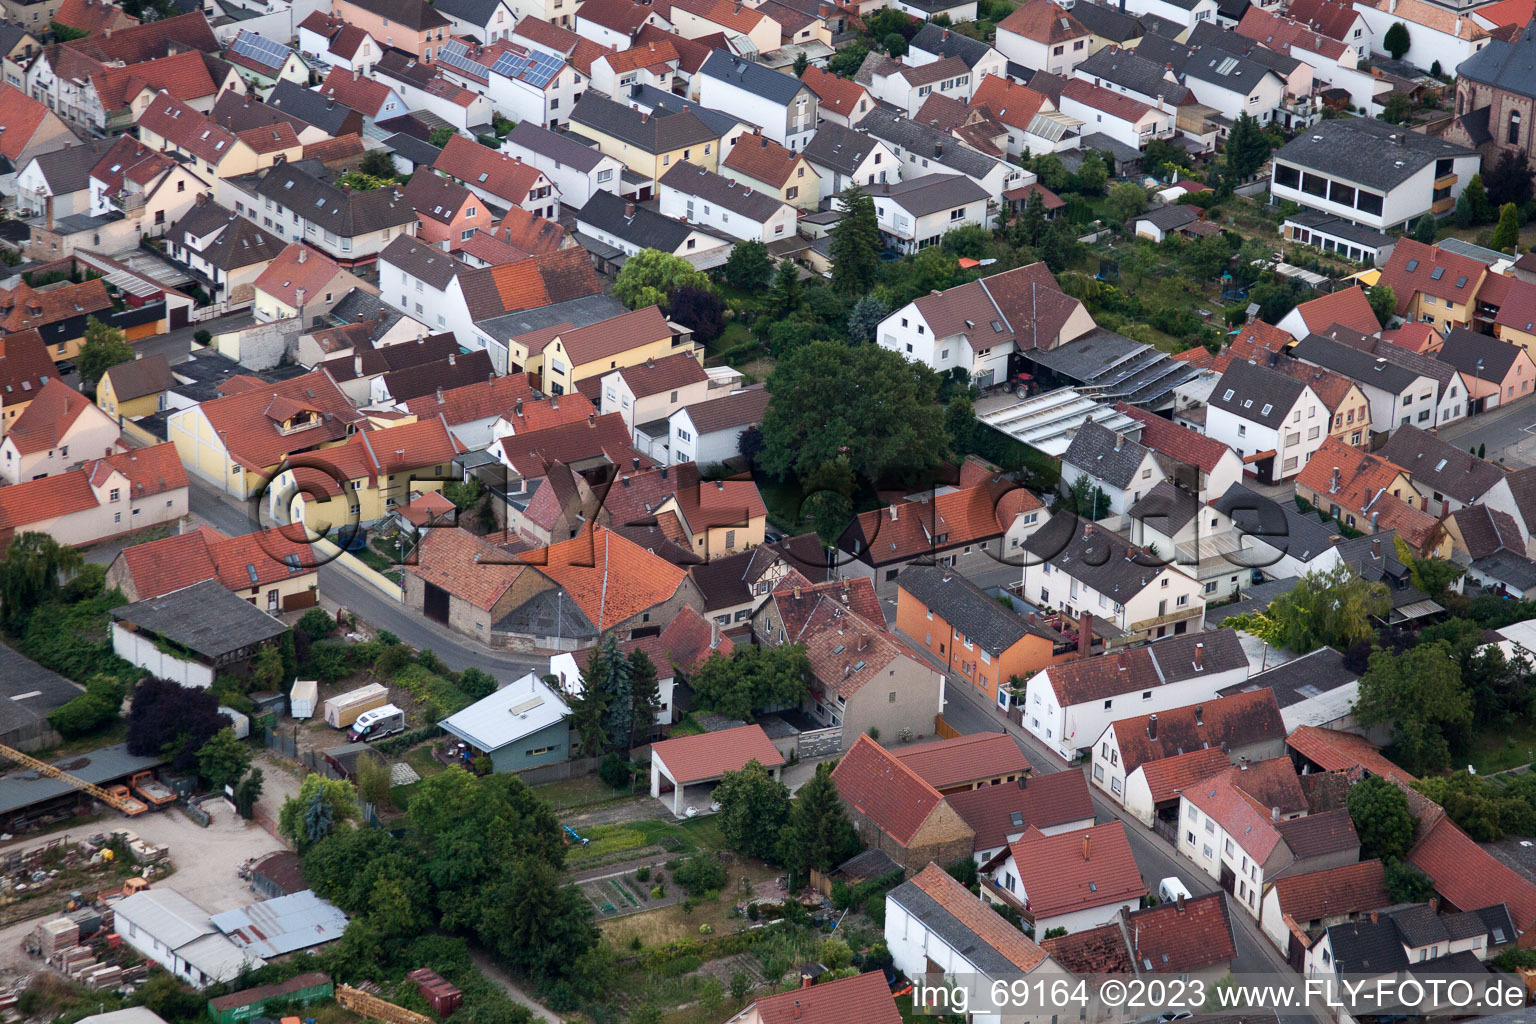 Aerial view of District Bobenheim in Bobenheim-Roxheim in the state Rhineland-Palatinate, Germany